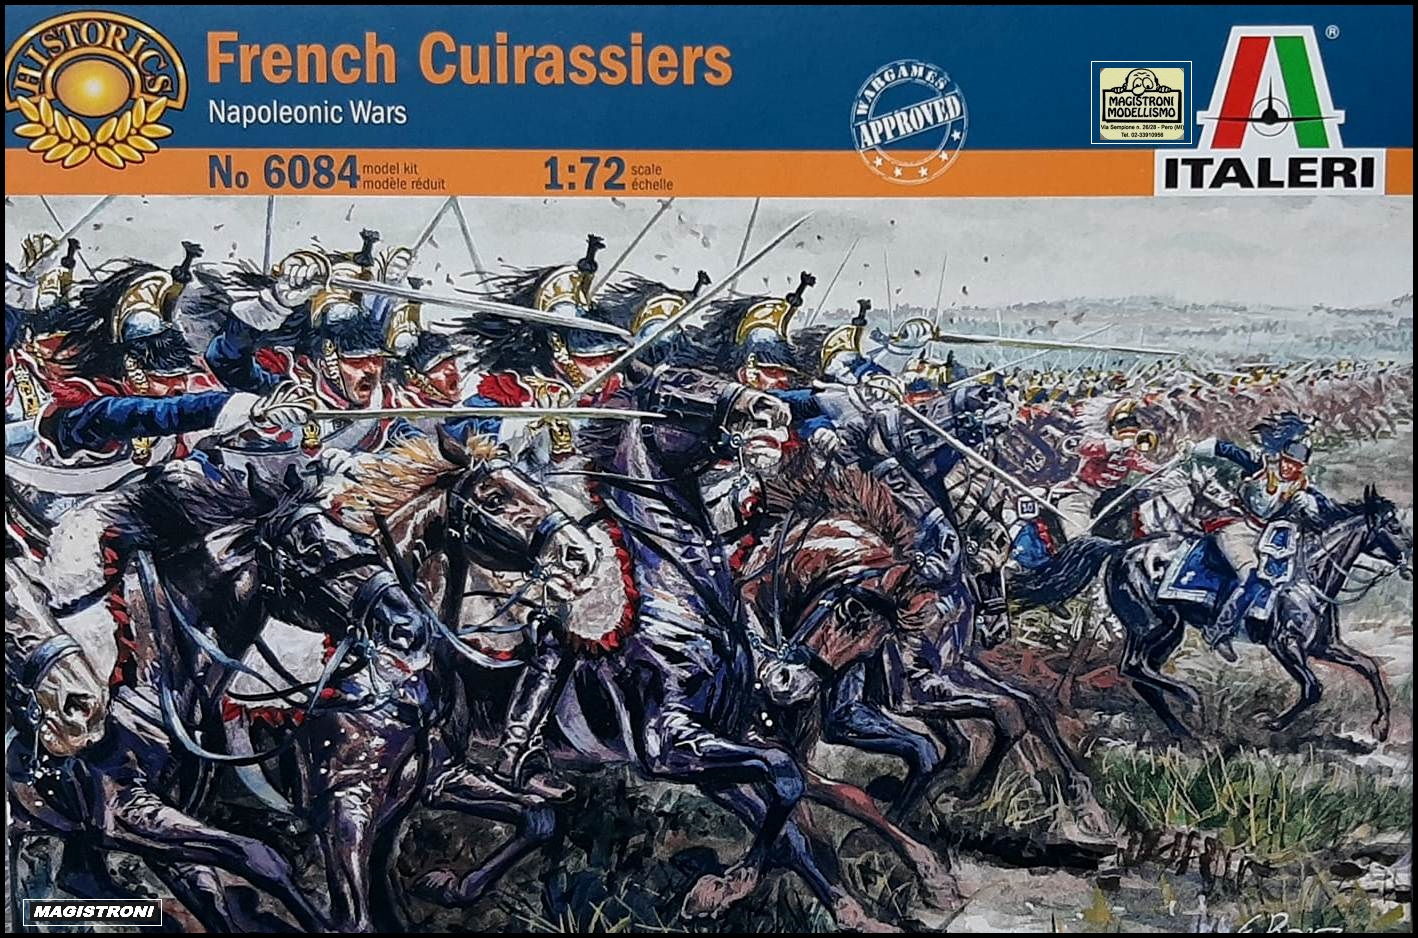 Napoleonic Wars FRENCH CUIRASSIERS